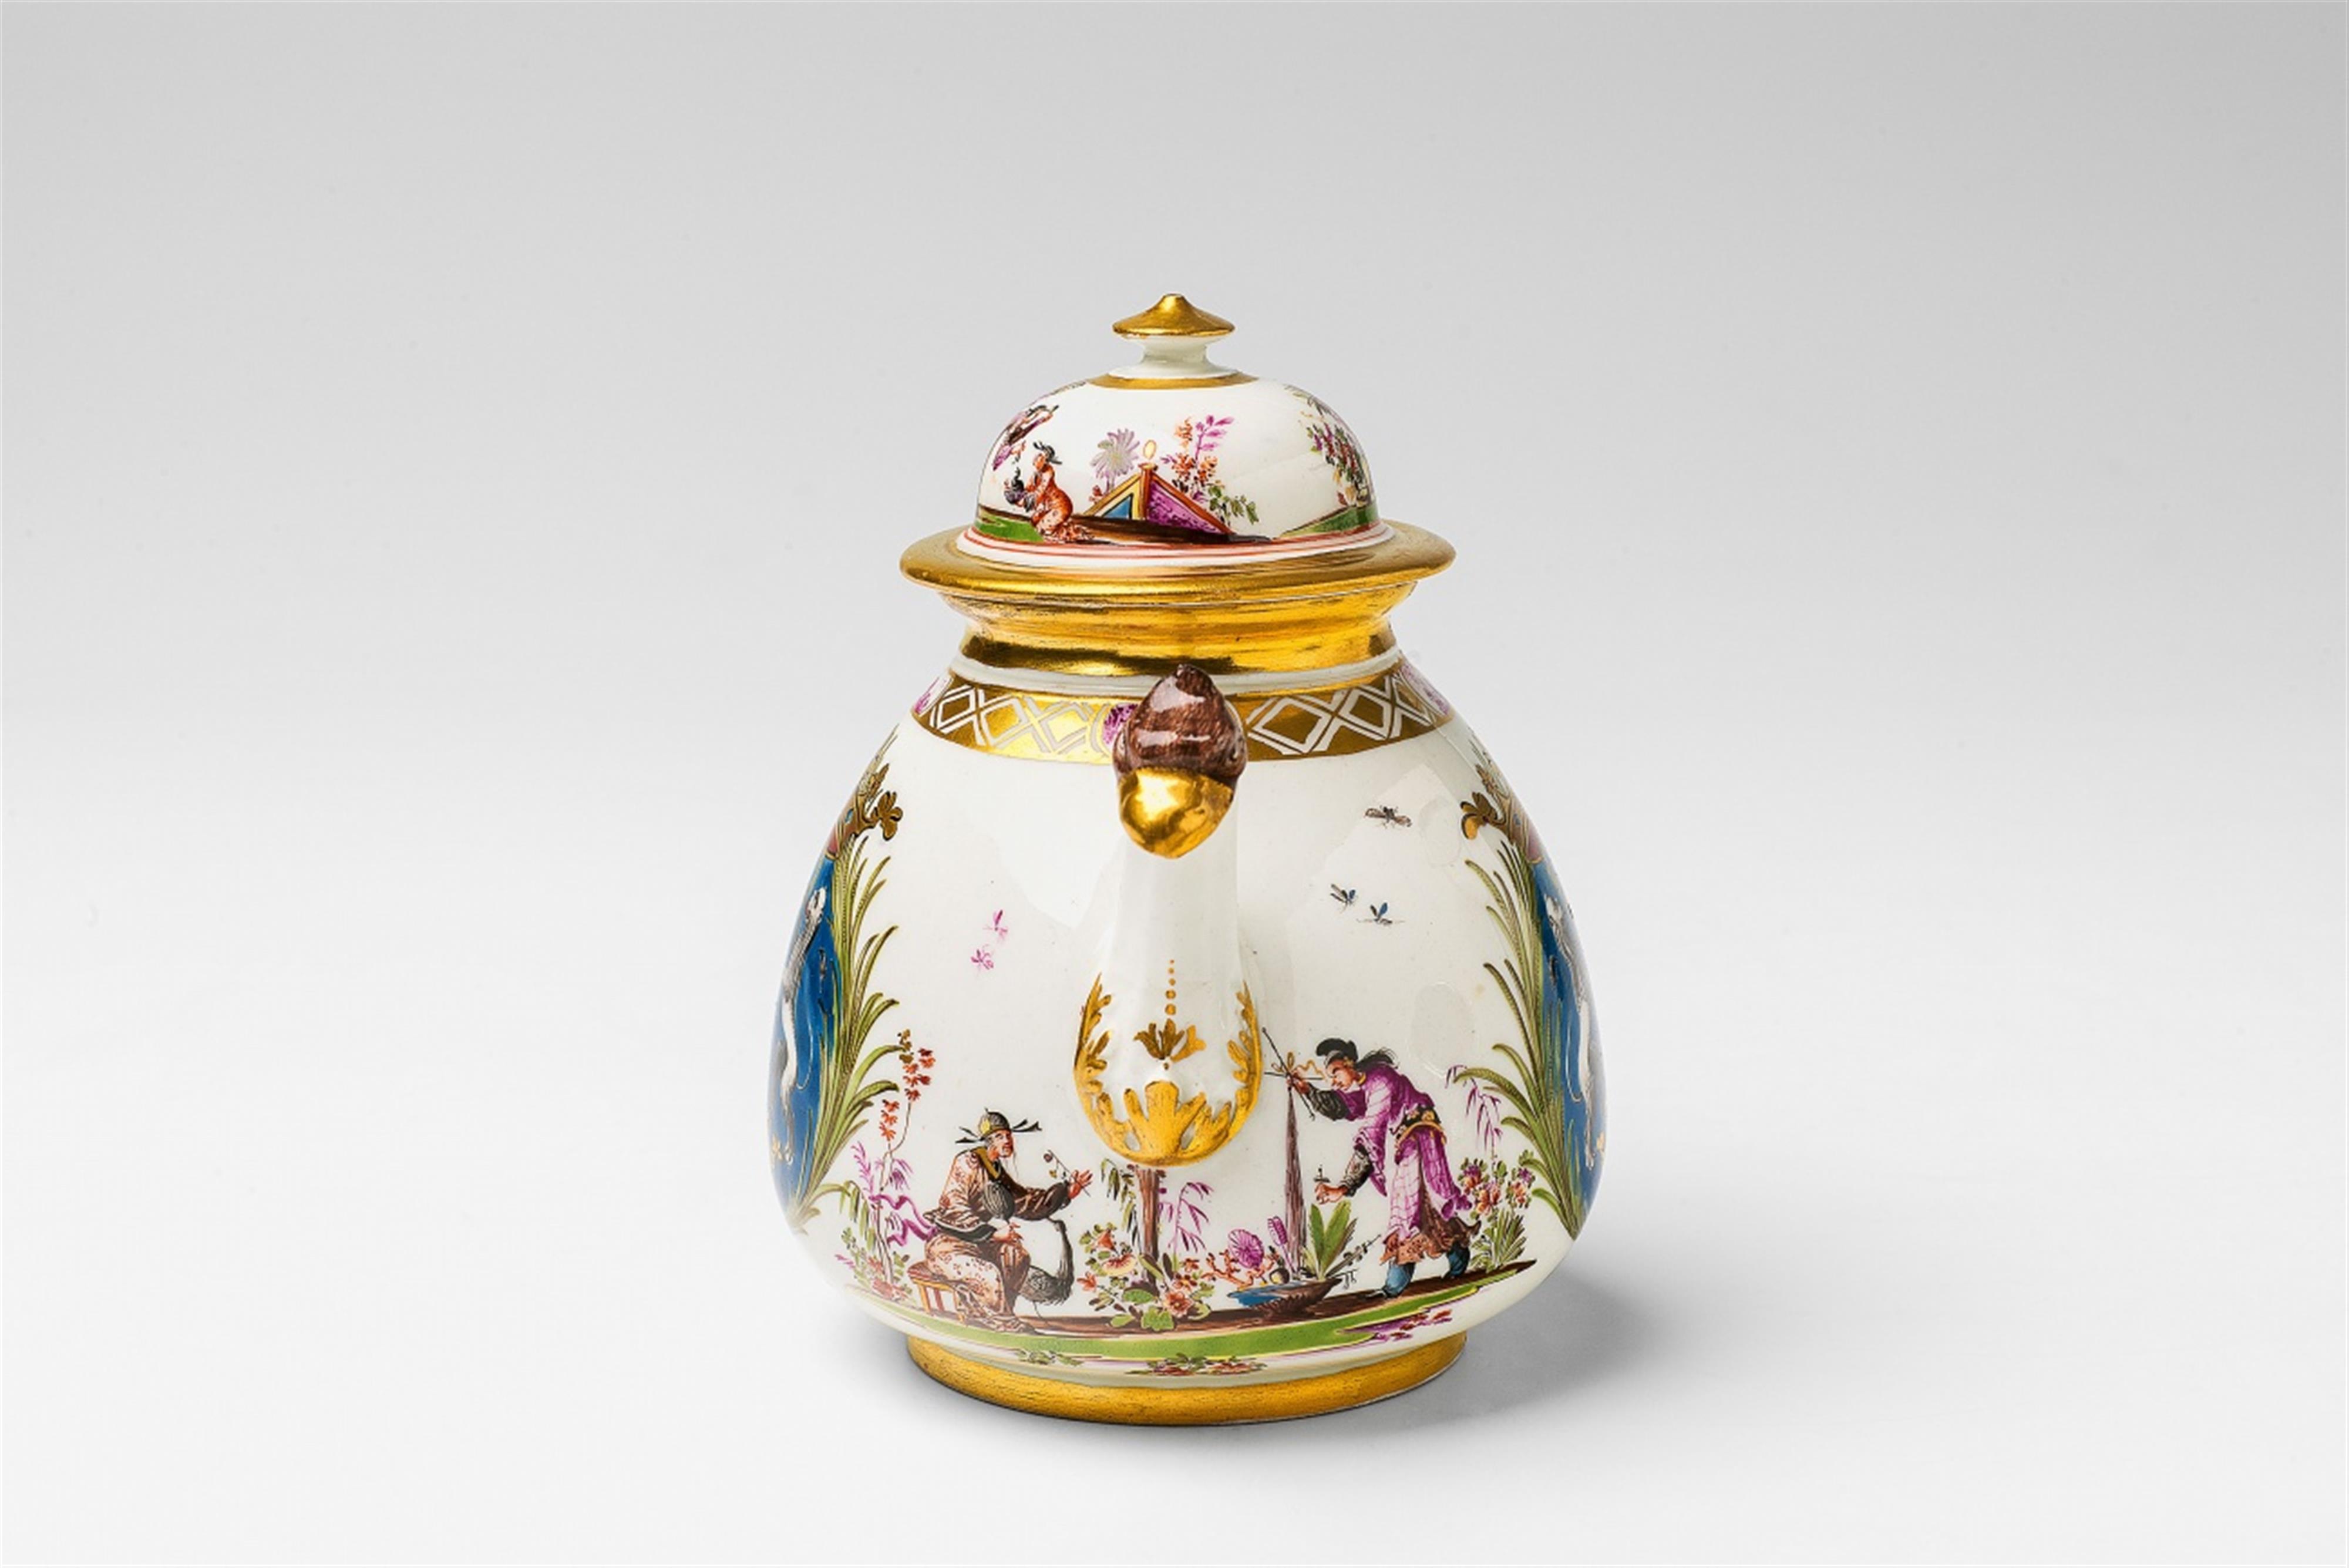 A Meissen porcelain teapot with rare heraldic decor - Lot 731